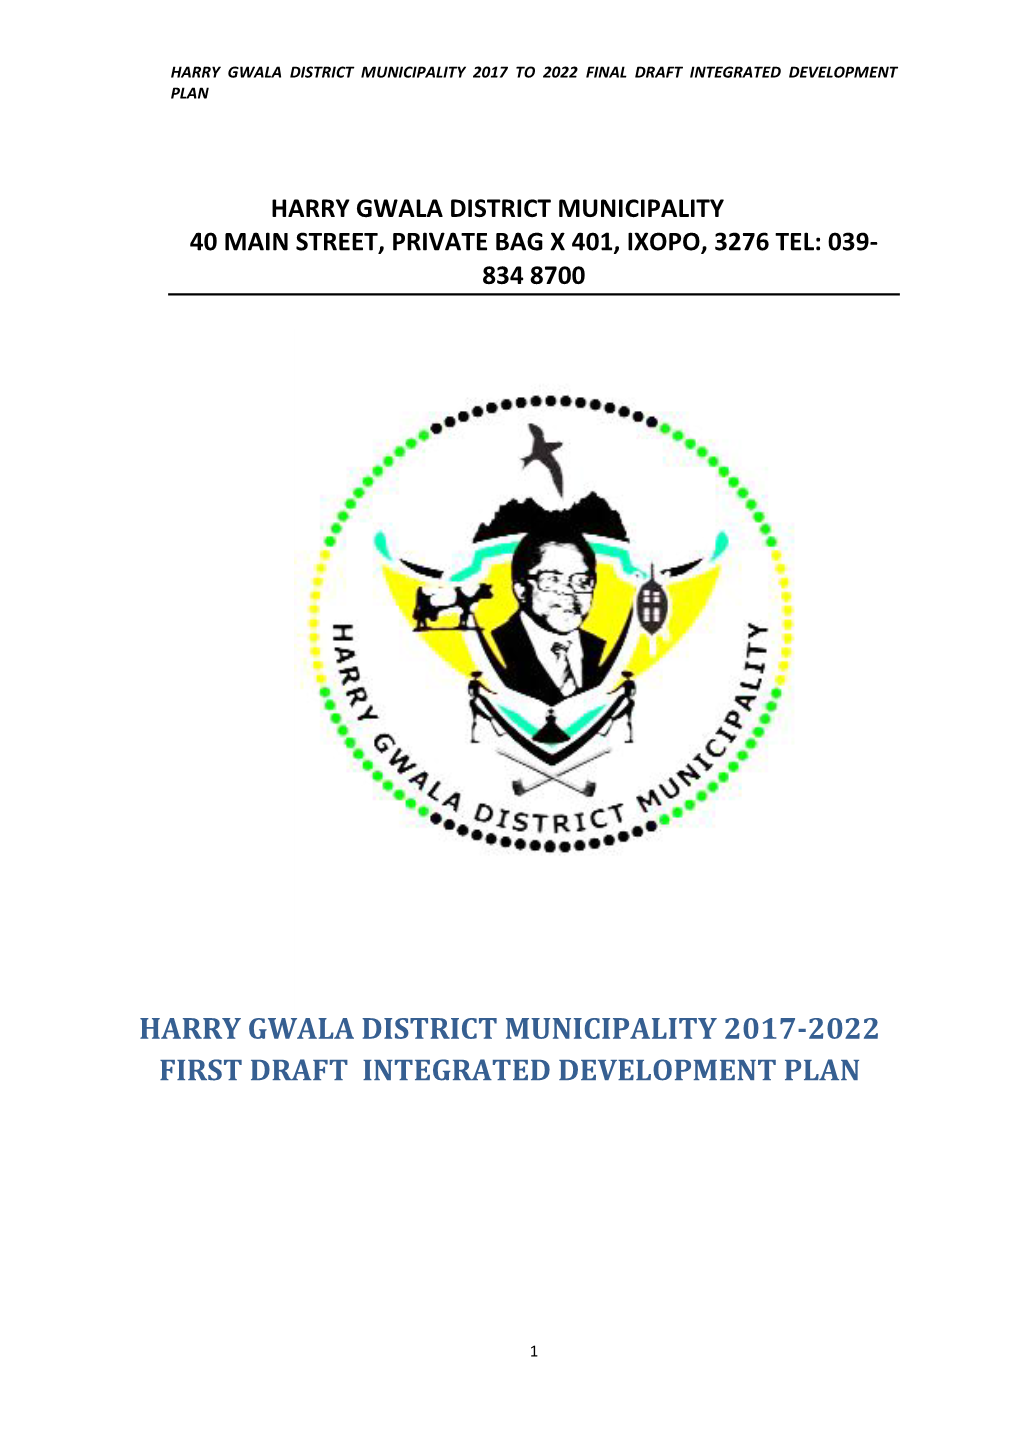 Harry Gwala District Municipality 2017-2022 First Draft Integrated Development Plan